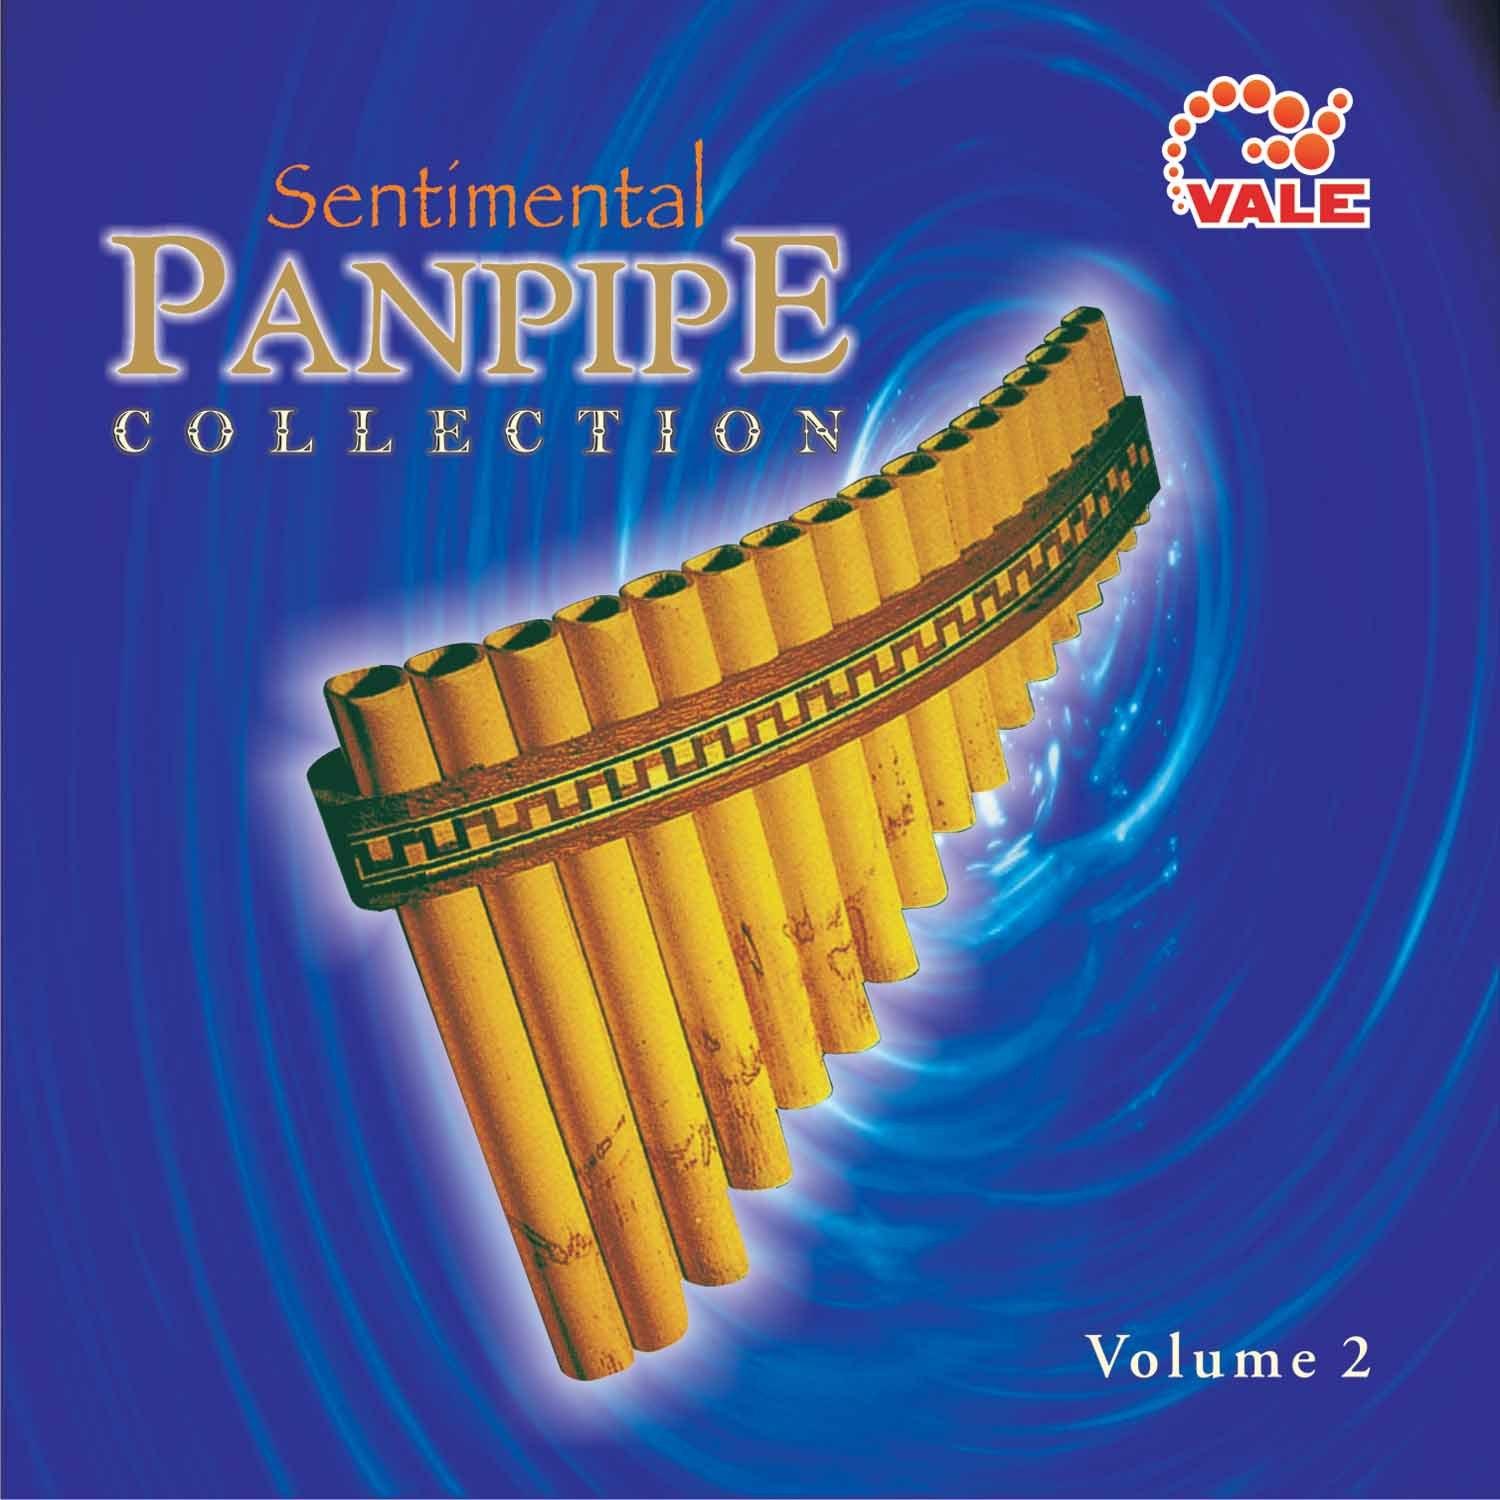 Sentimental Panpipe Collection, Vol. 2